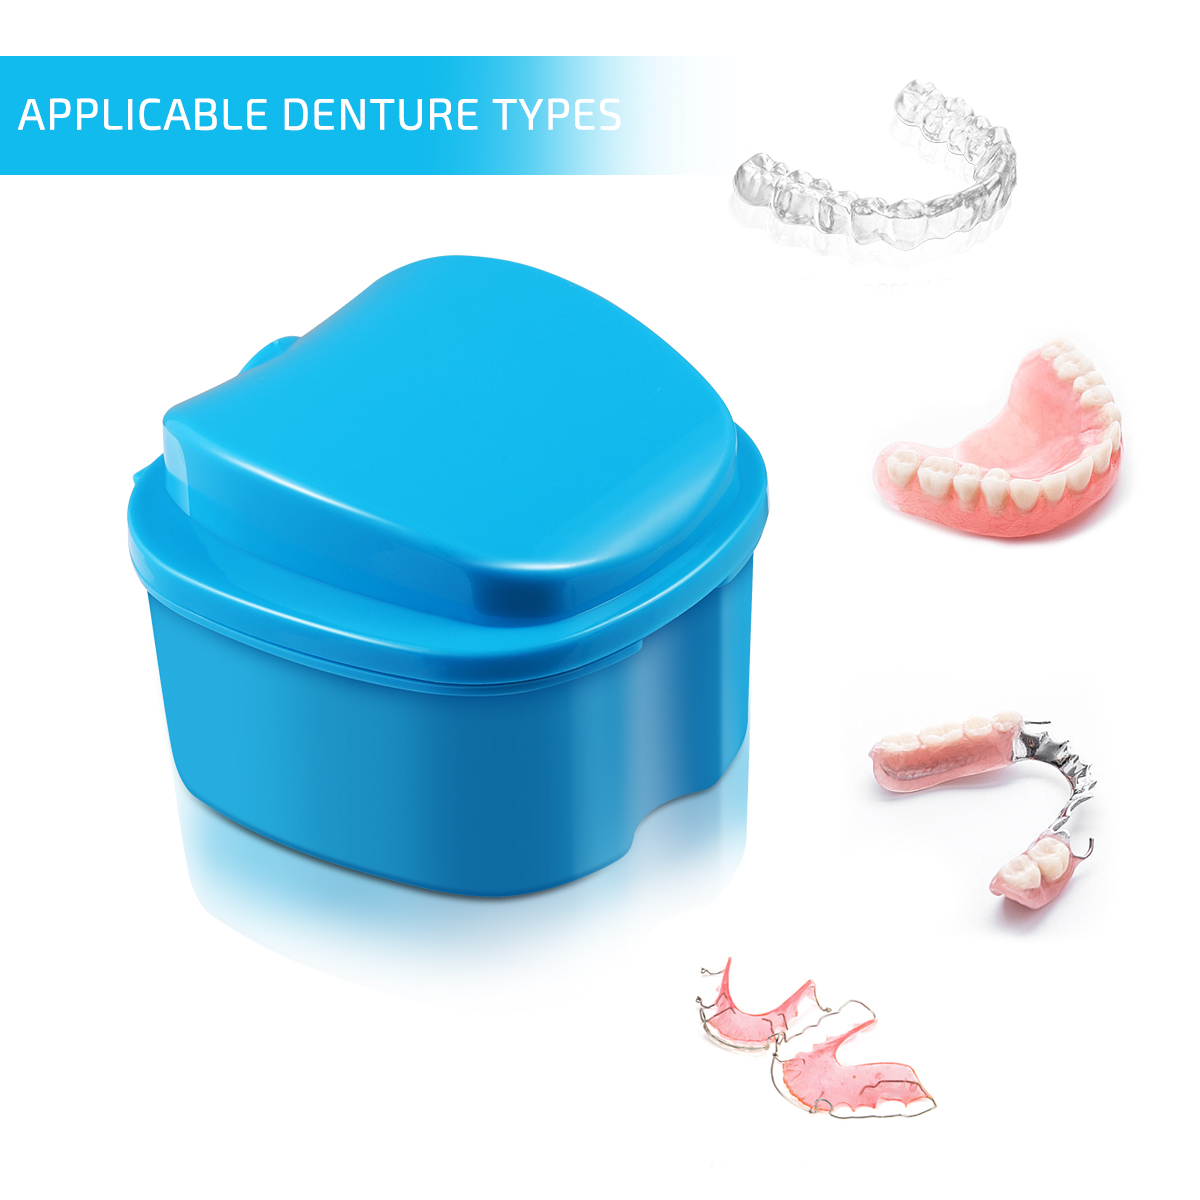 Denture Case Denture Bath Box Case Dental Orthodontic Retainer False Teeth Storage Case Box with Strainer denture cups for soaking dentures